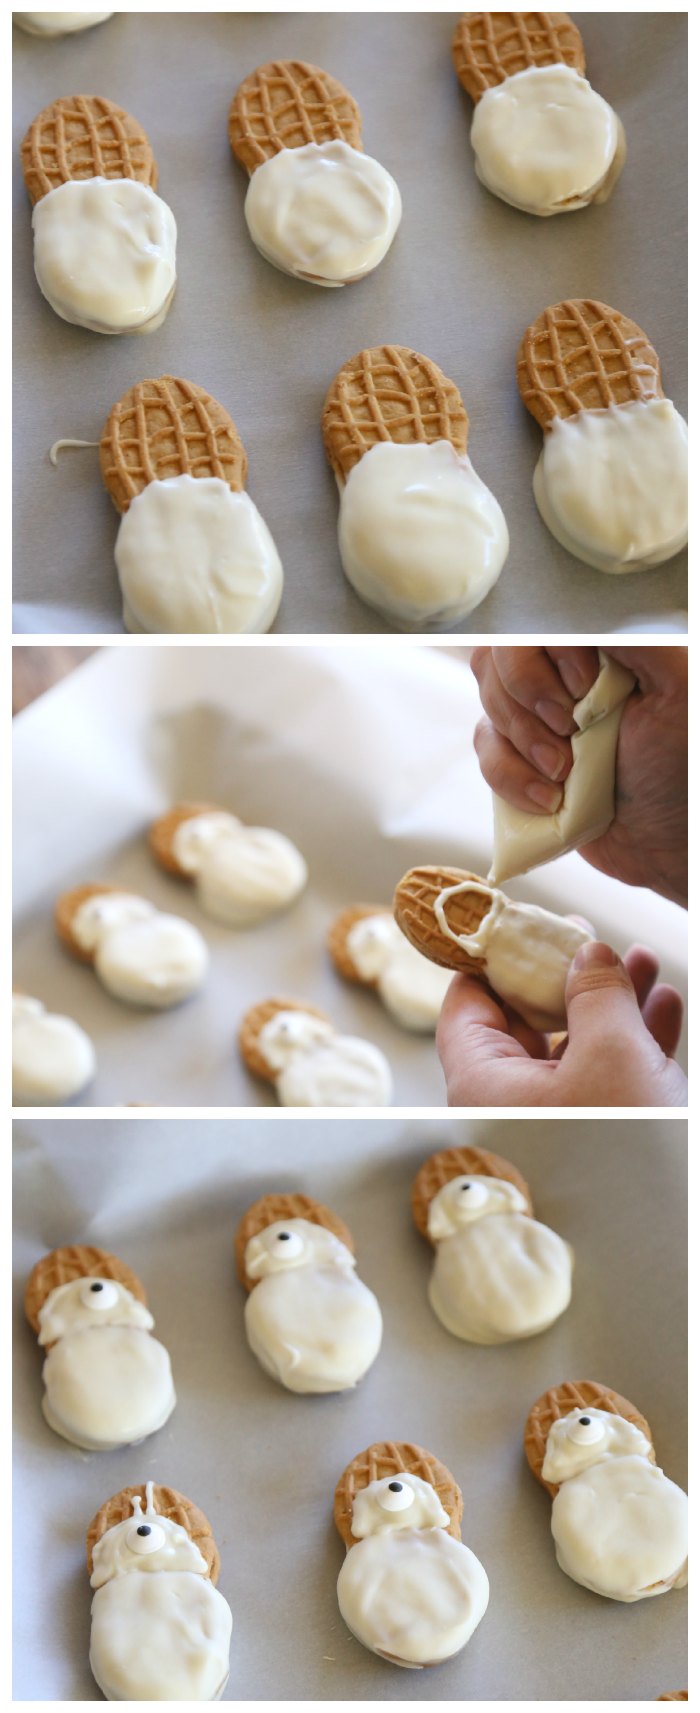 Making BB-8 Cookies